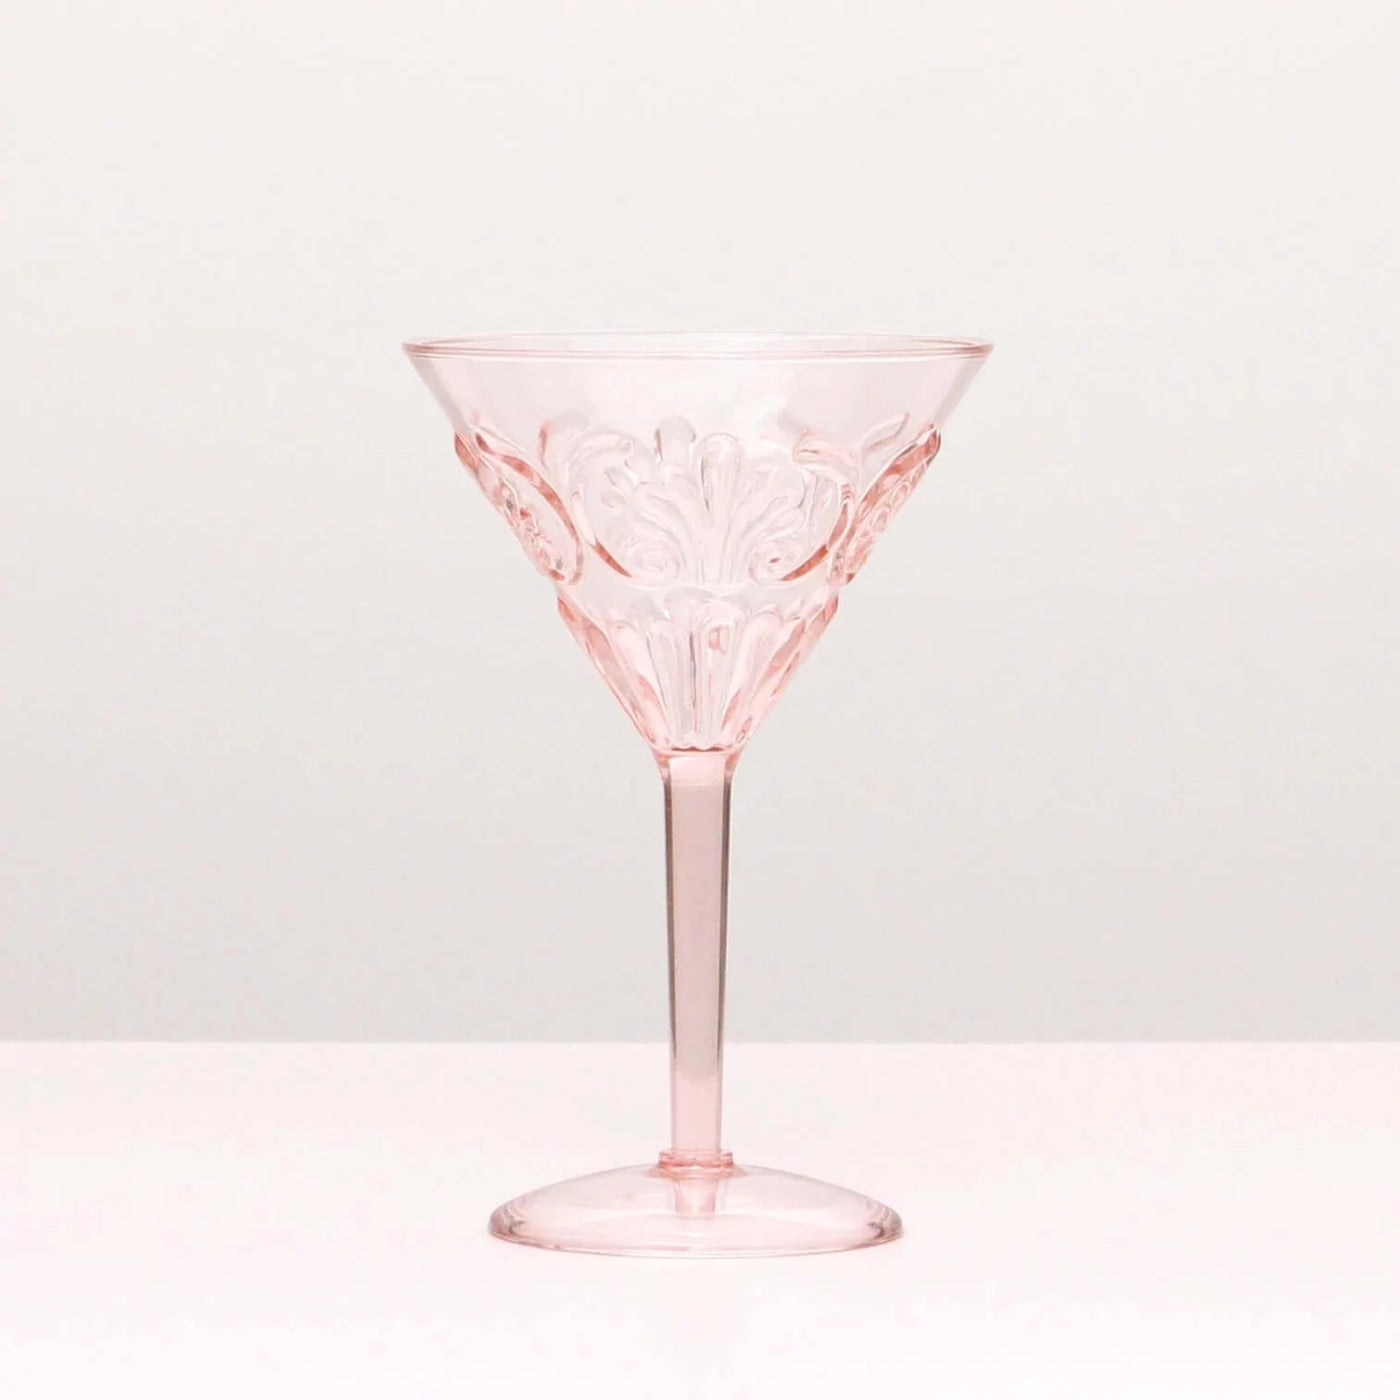 Flemington Acrylic Martini - Pale Pink